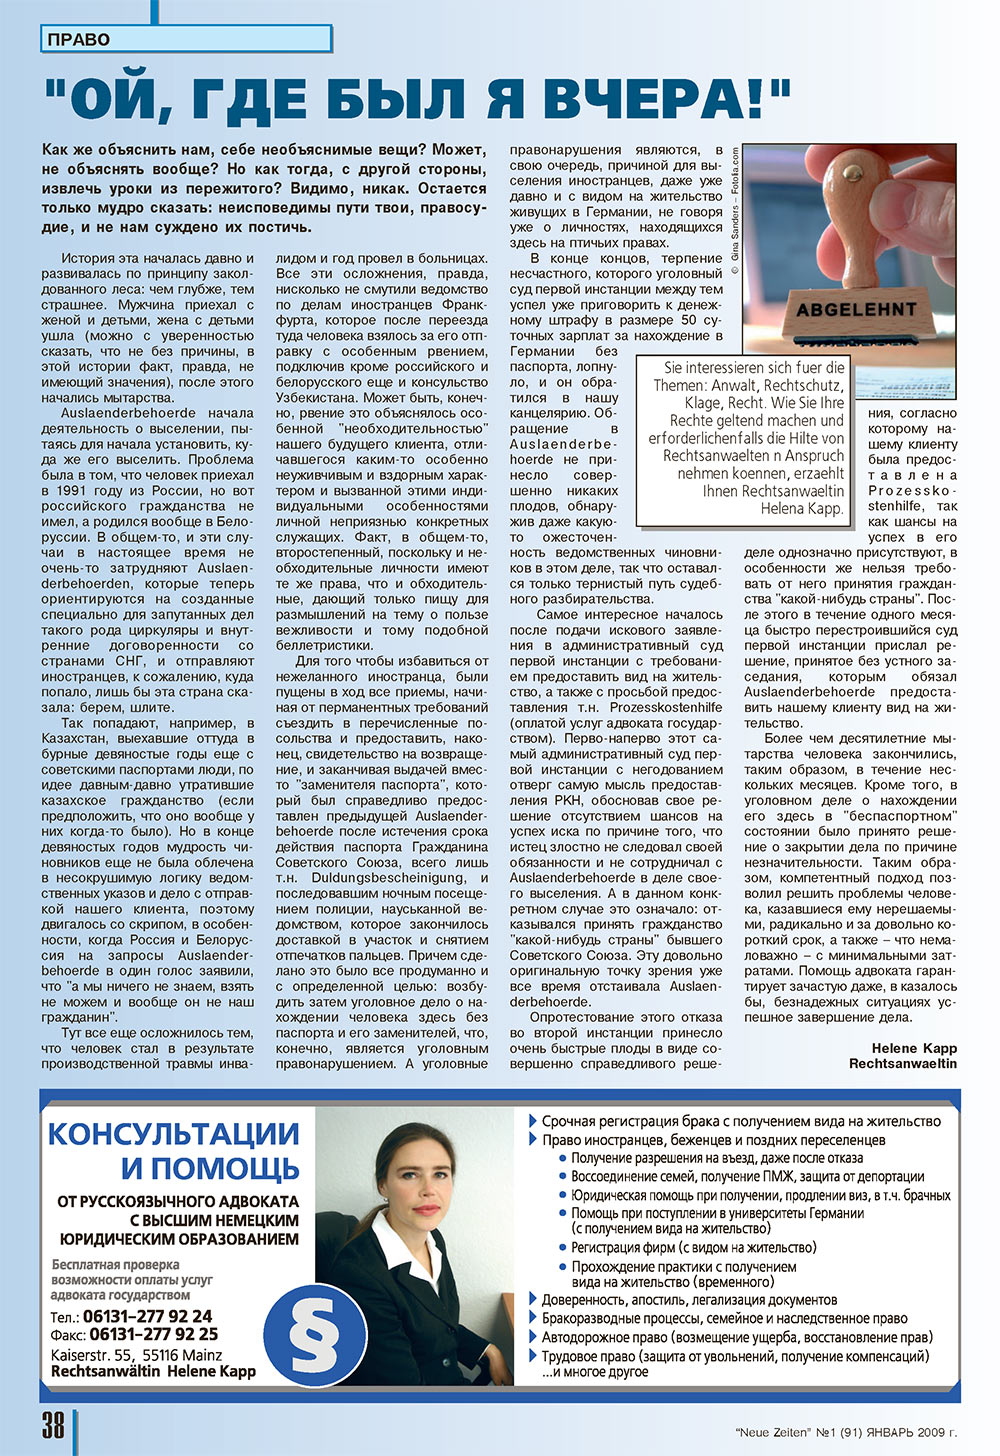 Neue Zeiten (журнал). 2009 год, номер 1, стр. 38